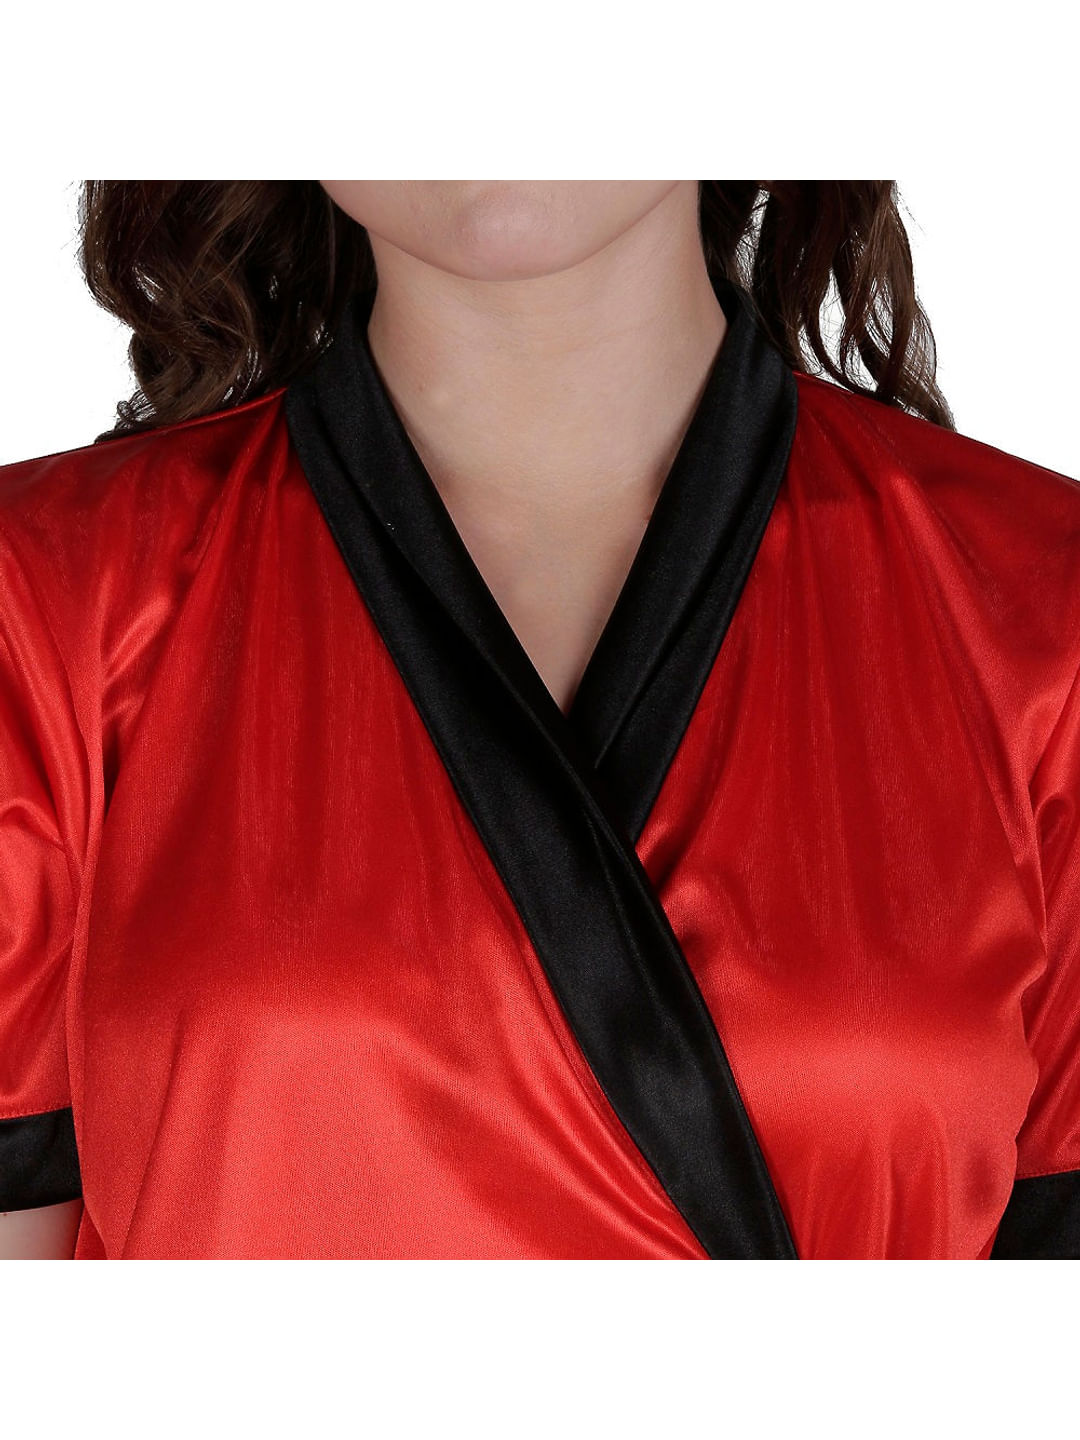 Satin Black, Red Robe, Housecoat (Free Size, HC-56)